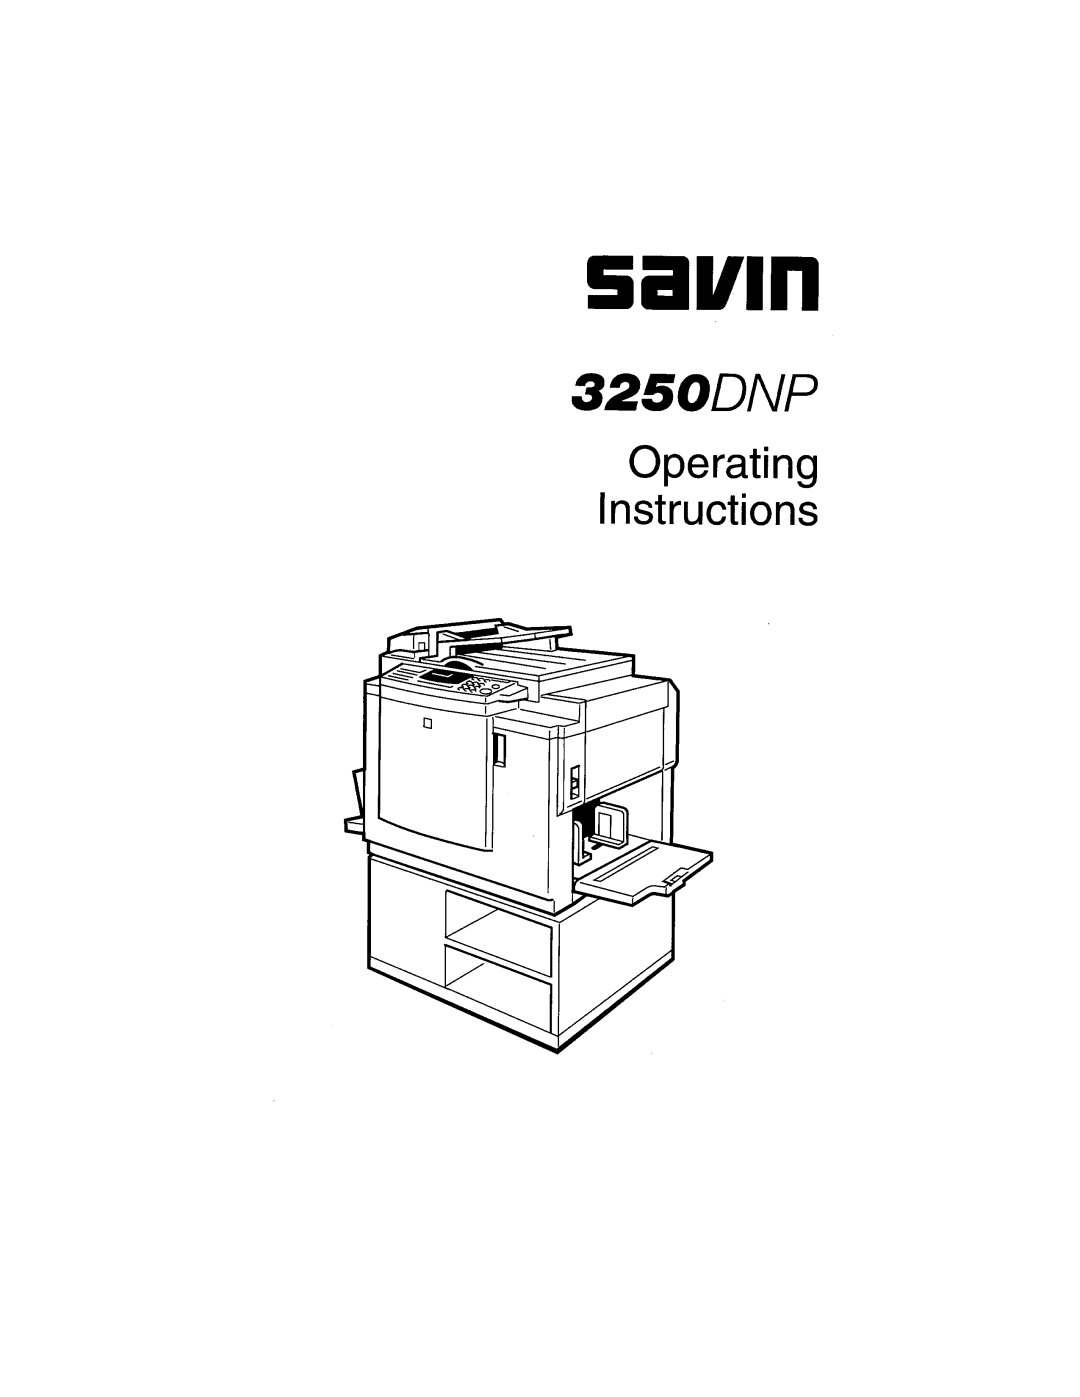 Savin 3250DNP manual 